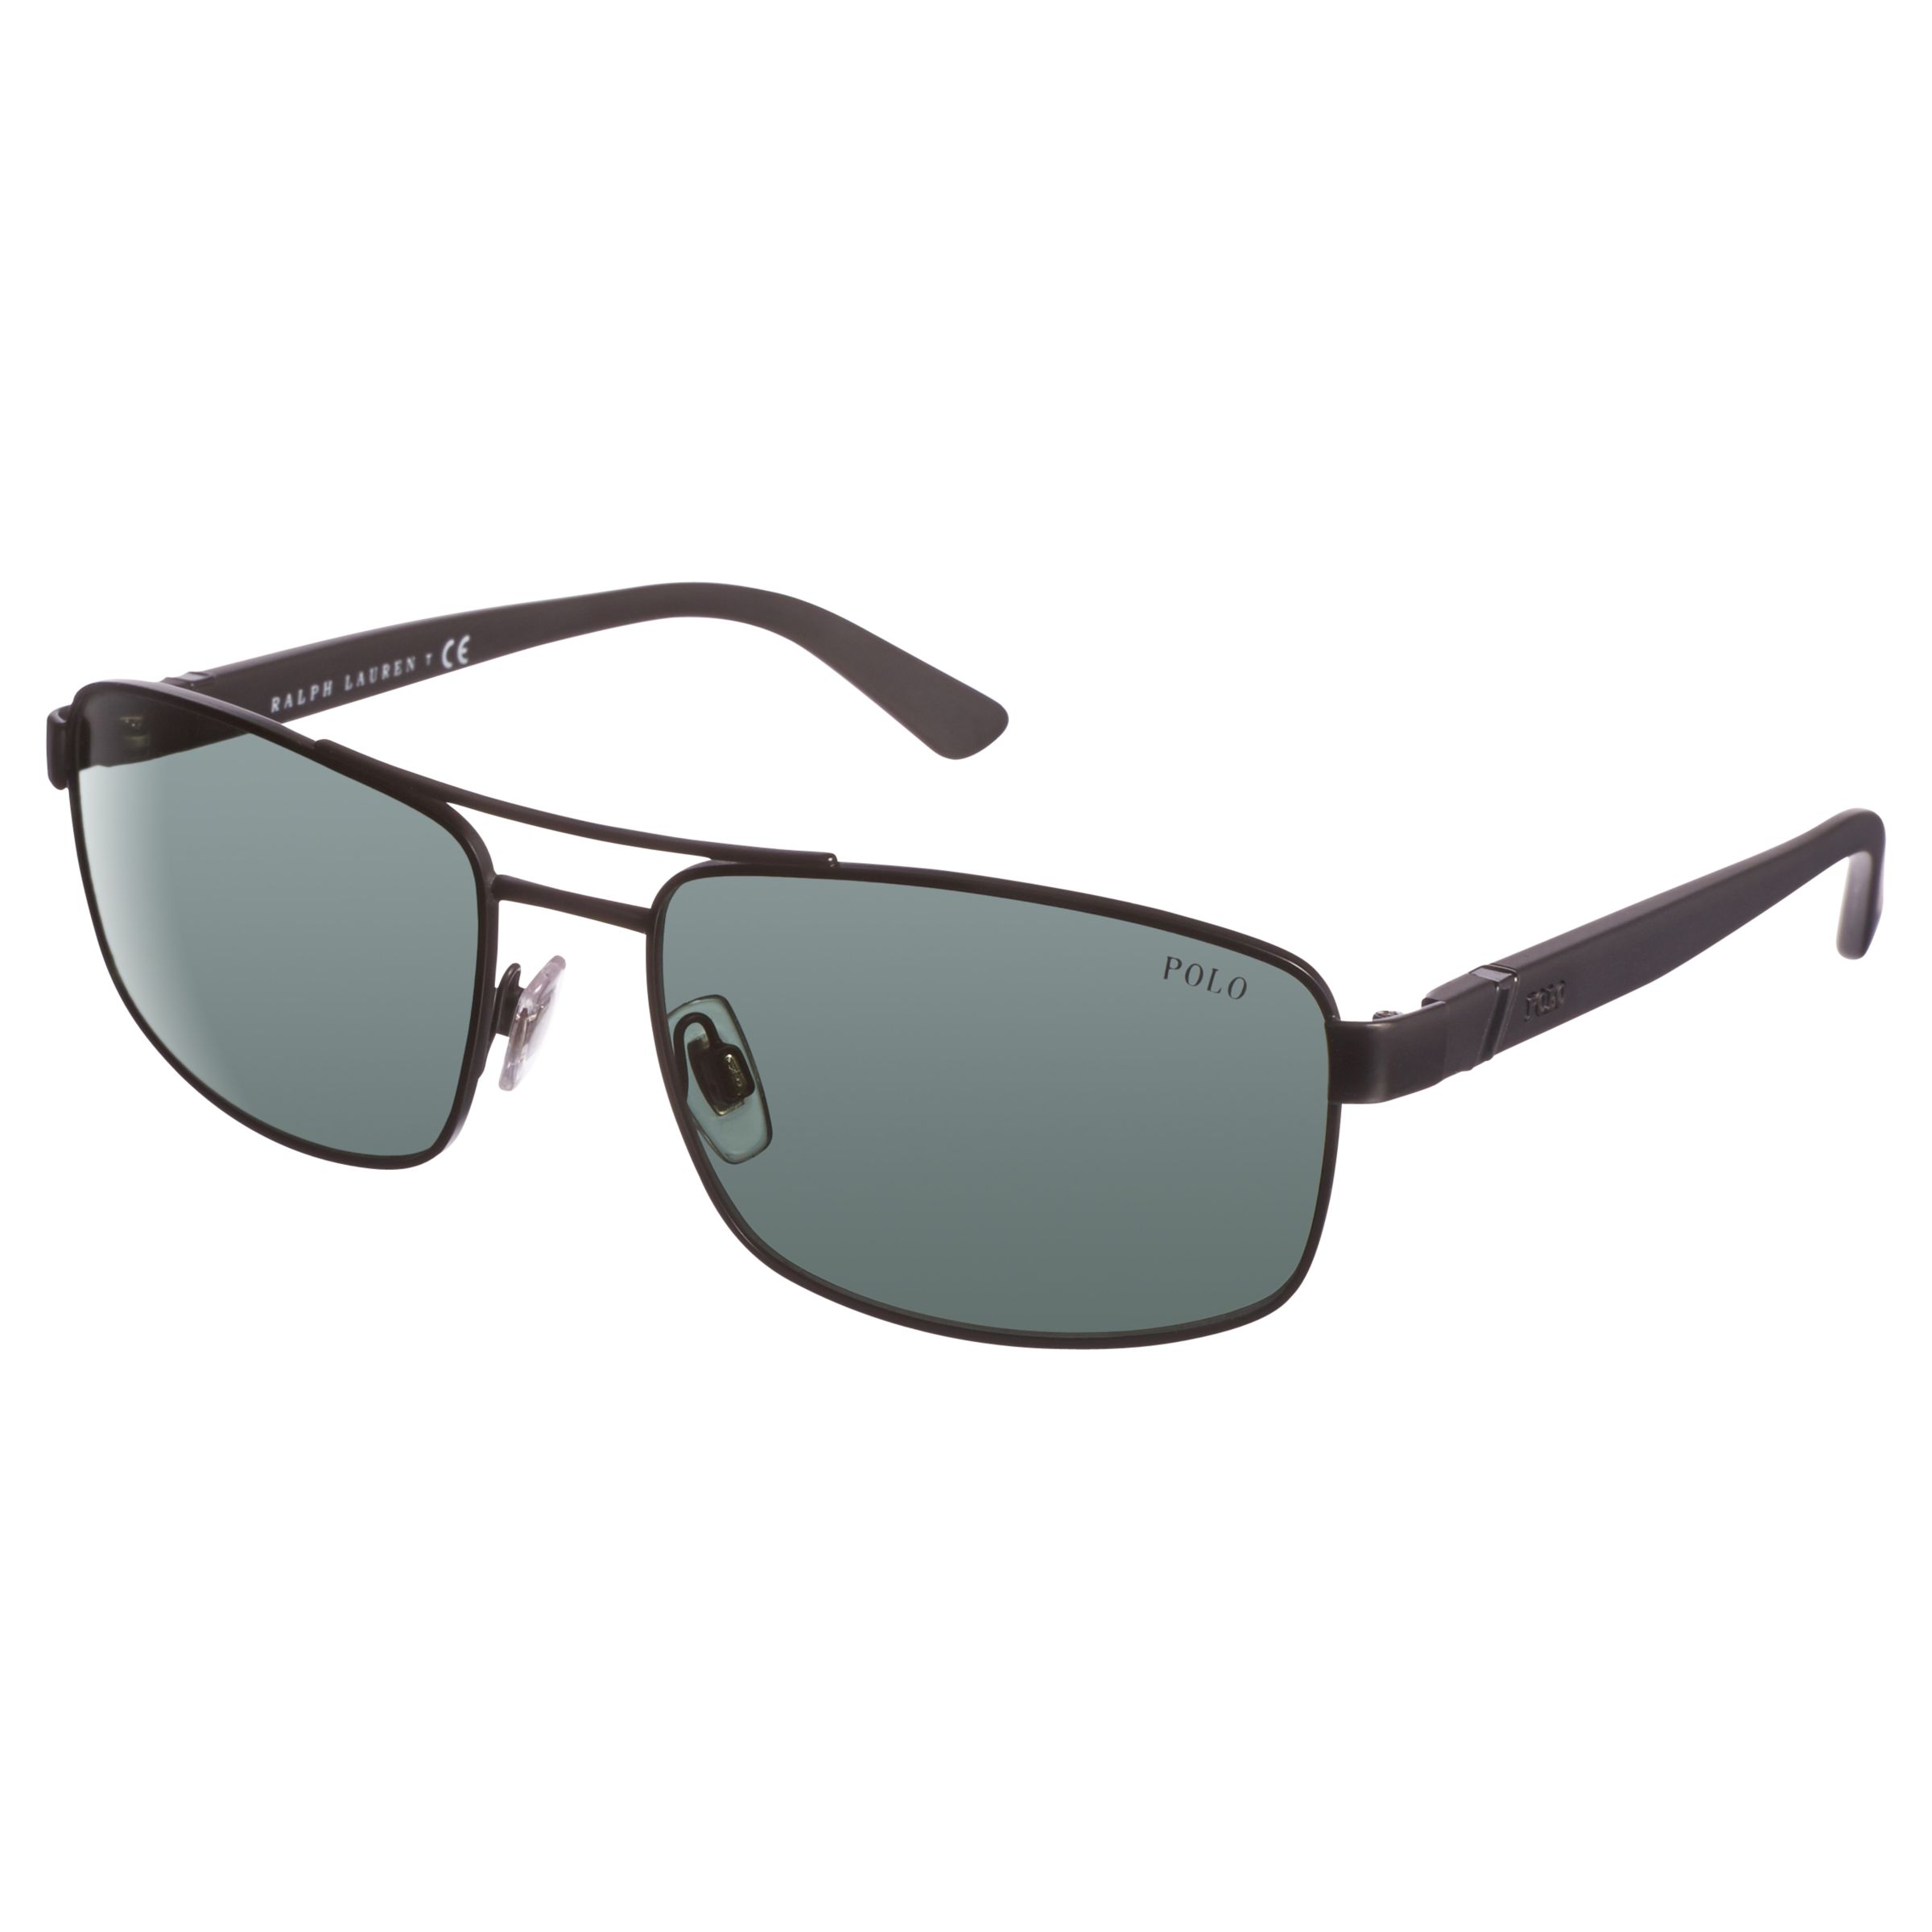 Polo Ralph Lauren 0PH3086 Rectangular Sunglasses